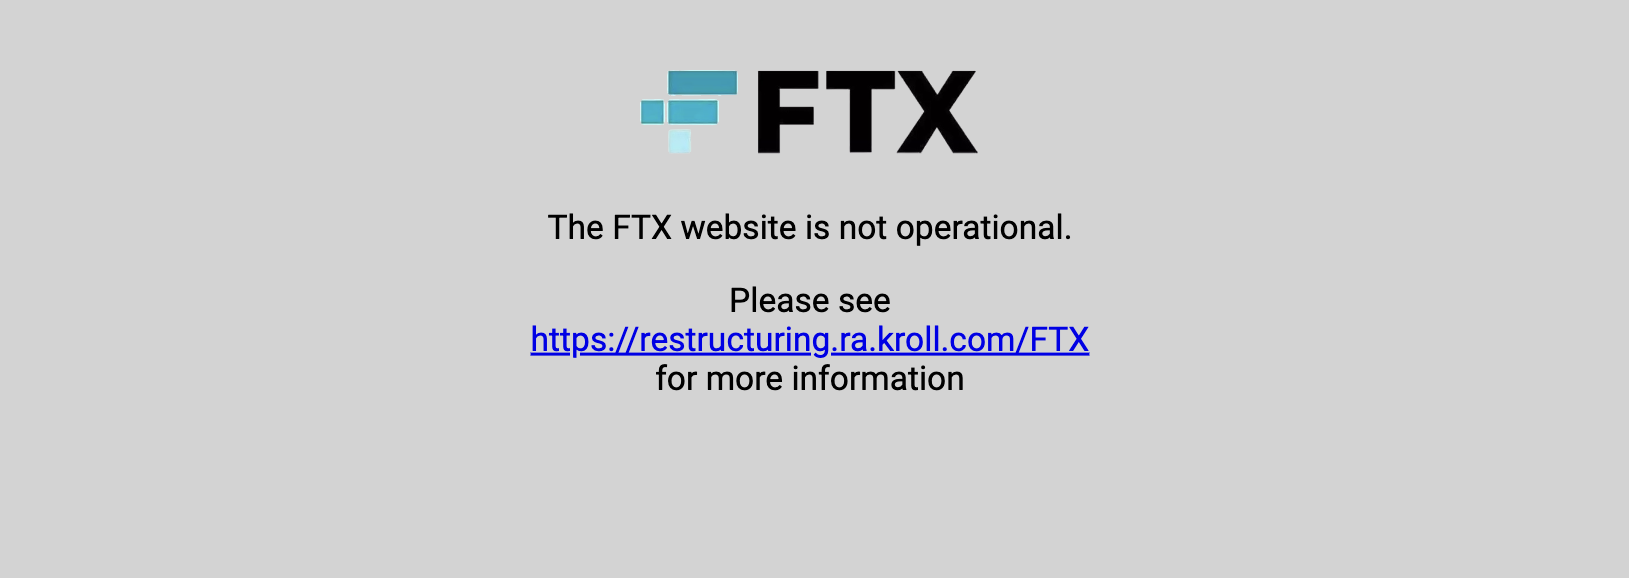 FTX Website Shut Down